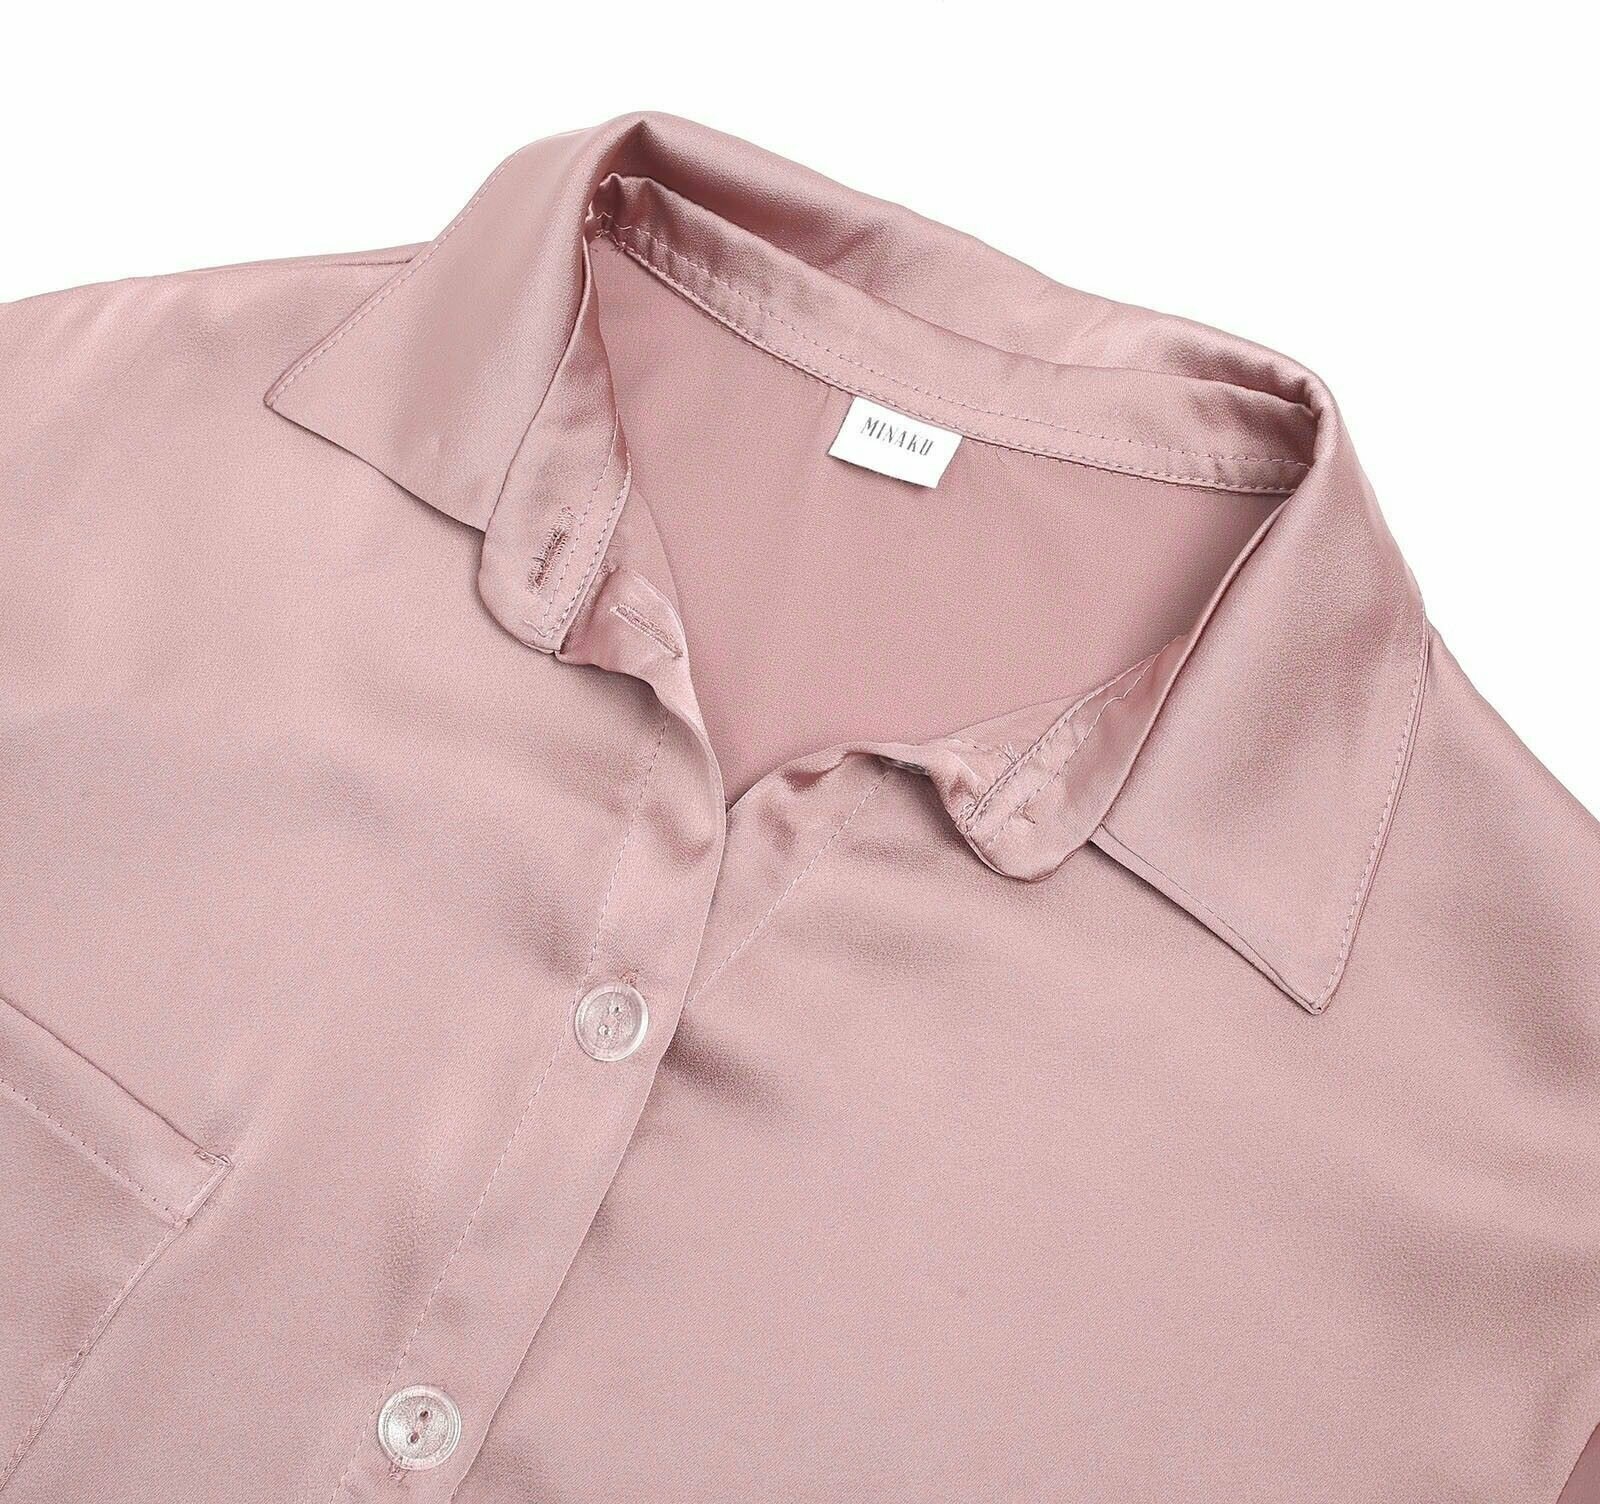 MINAKU Комплект (сорочка, брюки) женский MINAKU: Light touch цвет темно-розовый, р-р 54 - фотография № 11